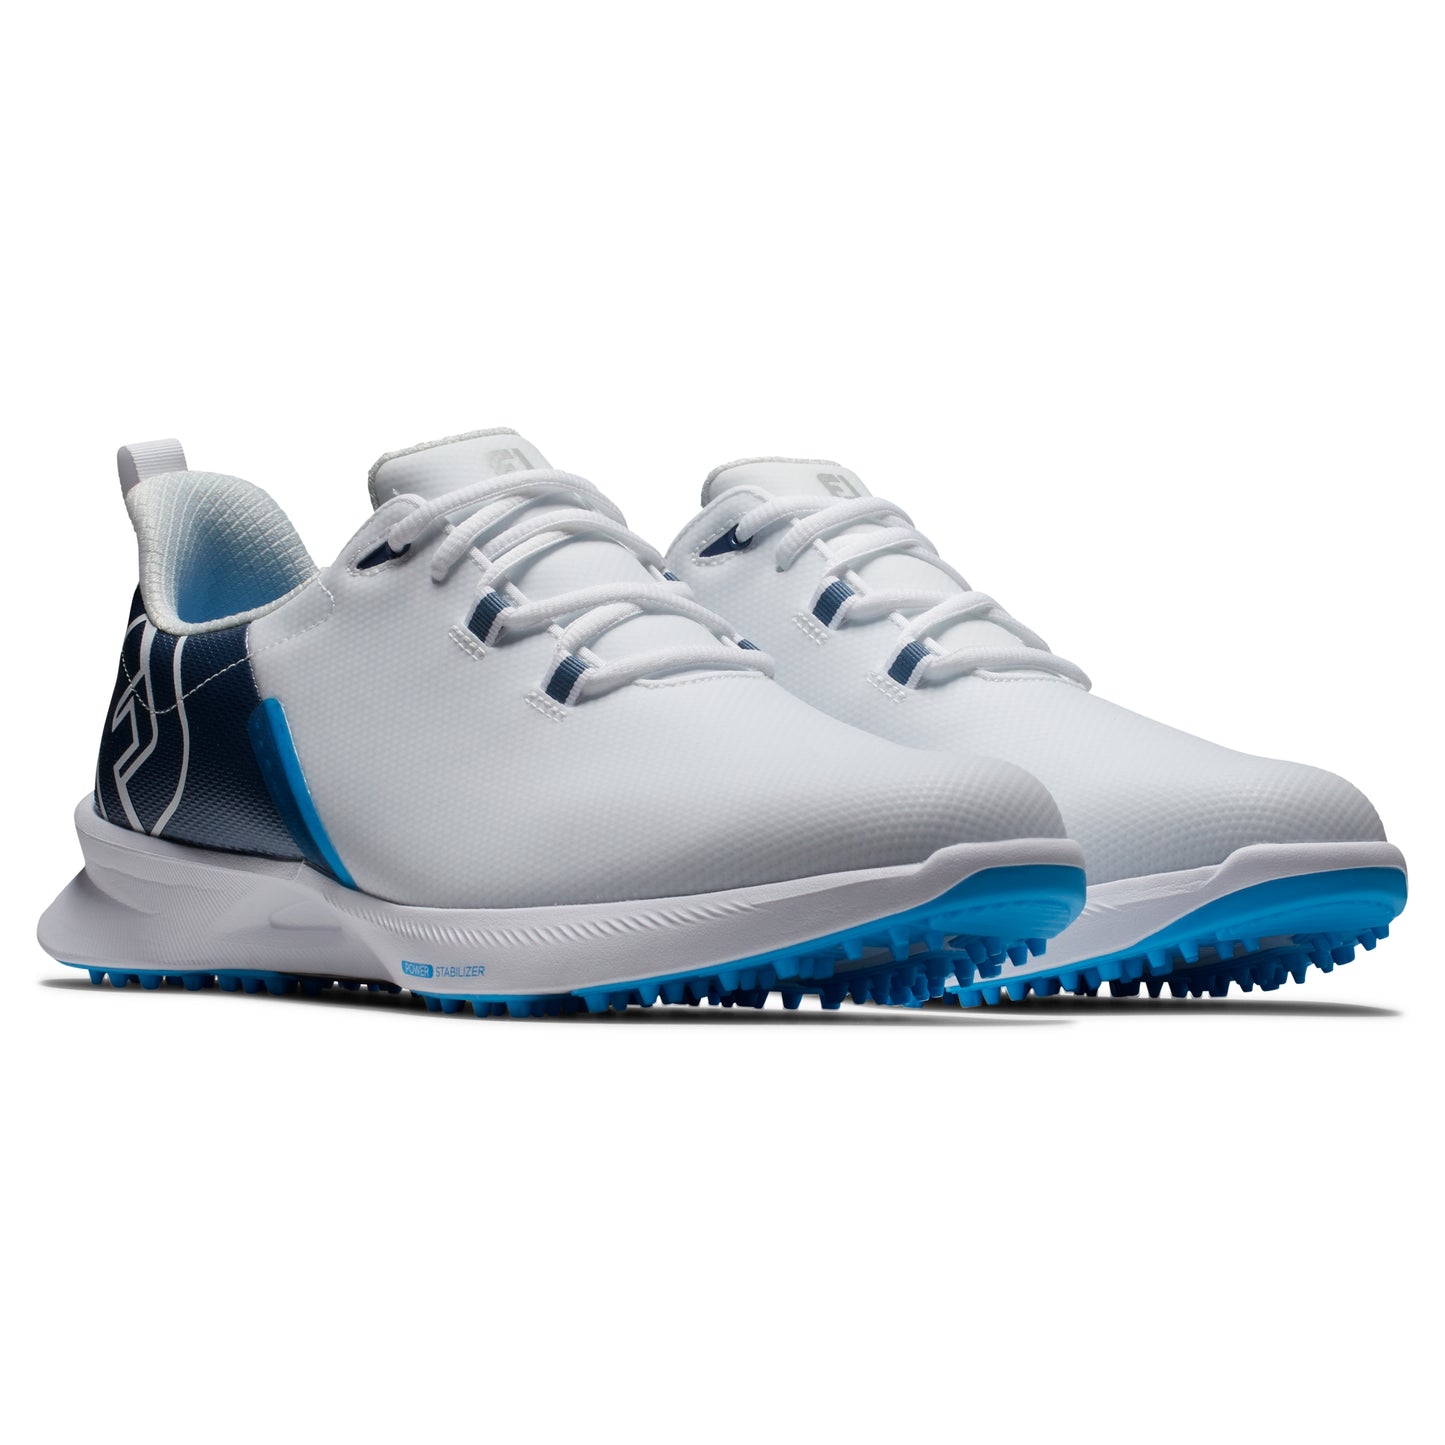 FootJoy Fuel Men's Golf Shoes - Navy/White/Blue